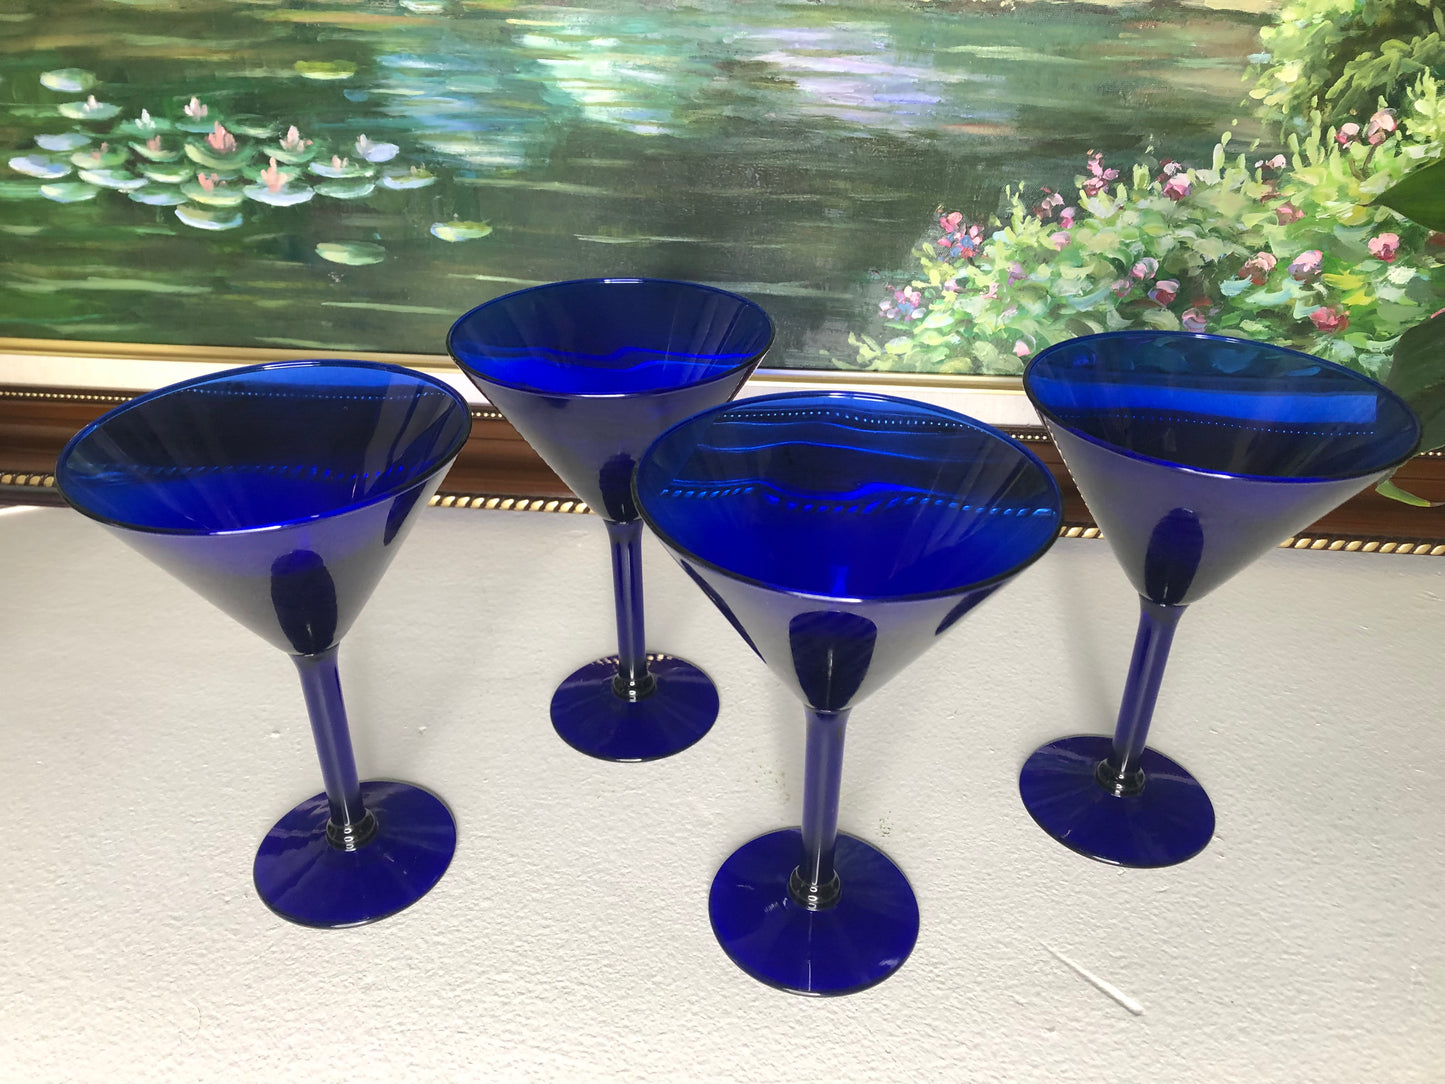 Vintage Cobalt Martini Glasses Set of 4 - Excellent Condition!